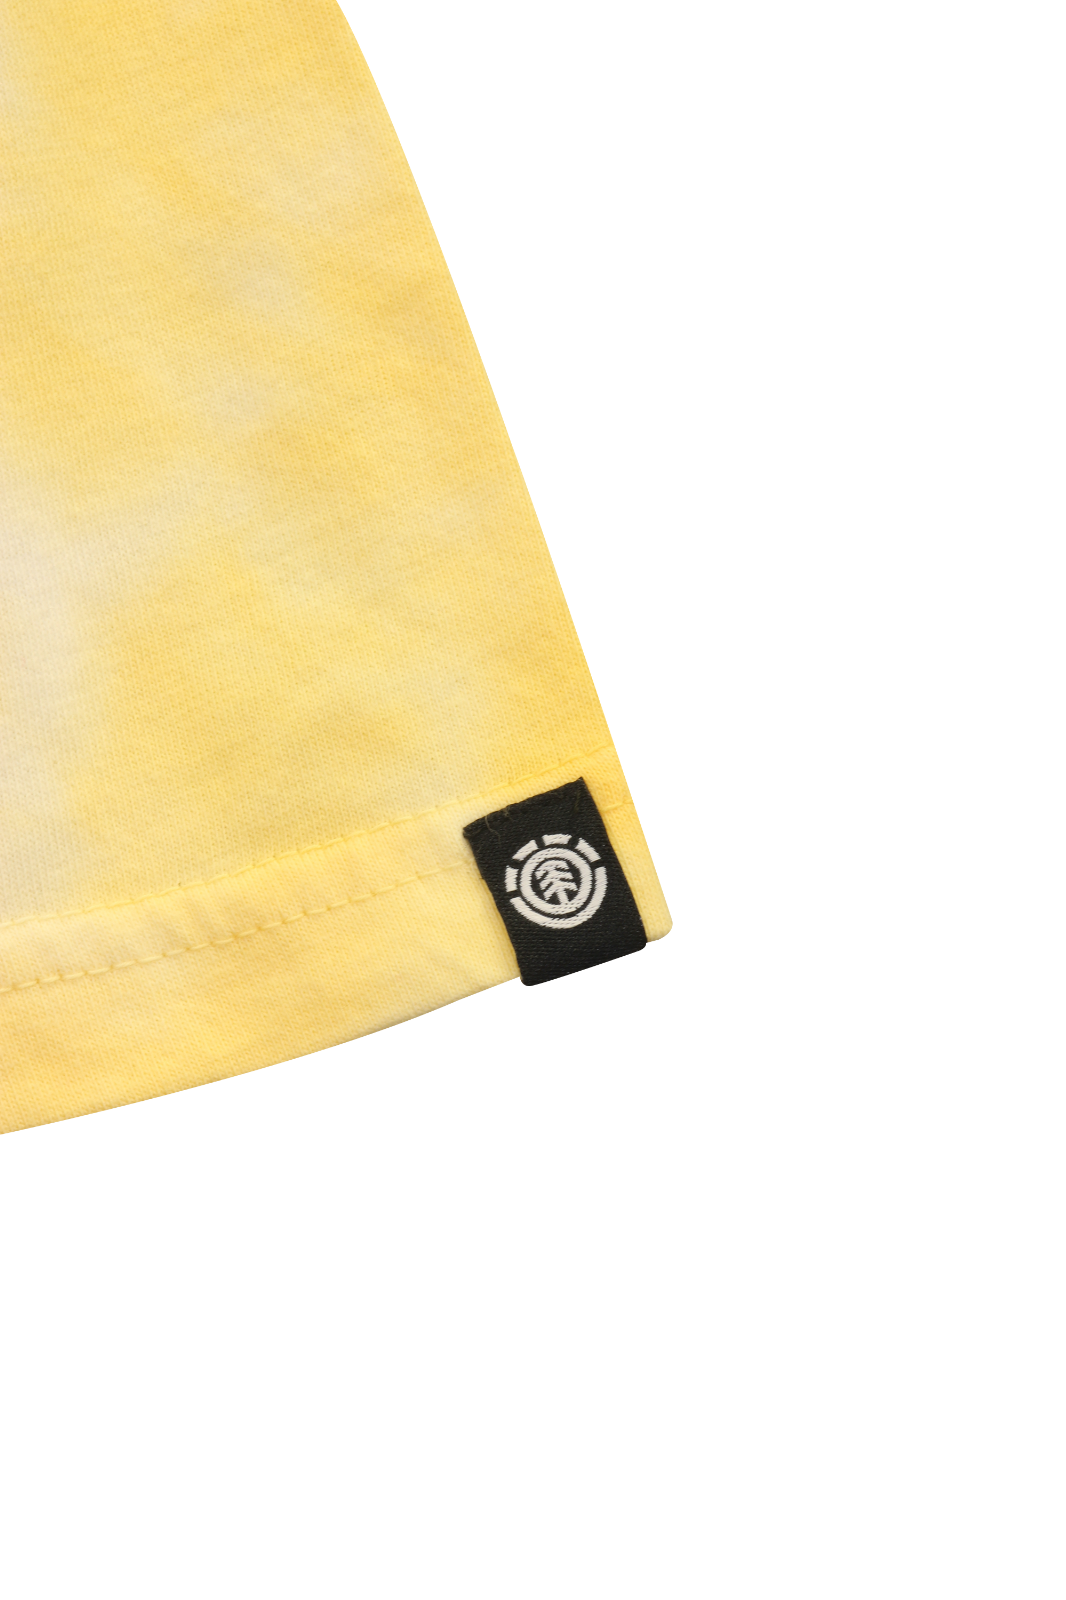 Element Men's T-Shirt Yellow Tie-Dye Four Elements Sketched Graphic S/S (S14)